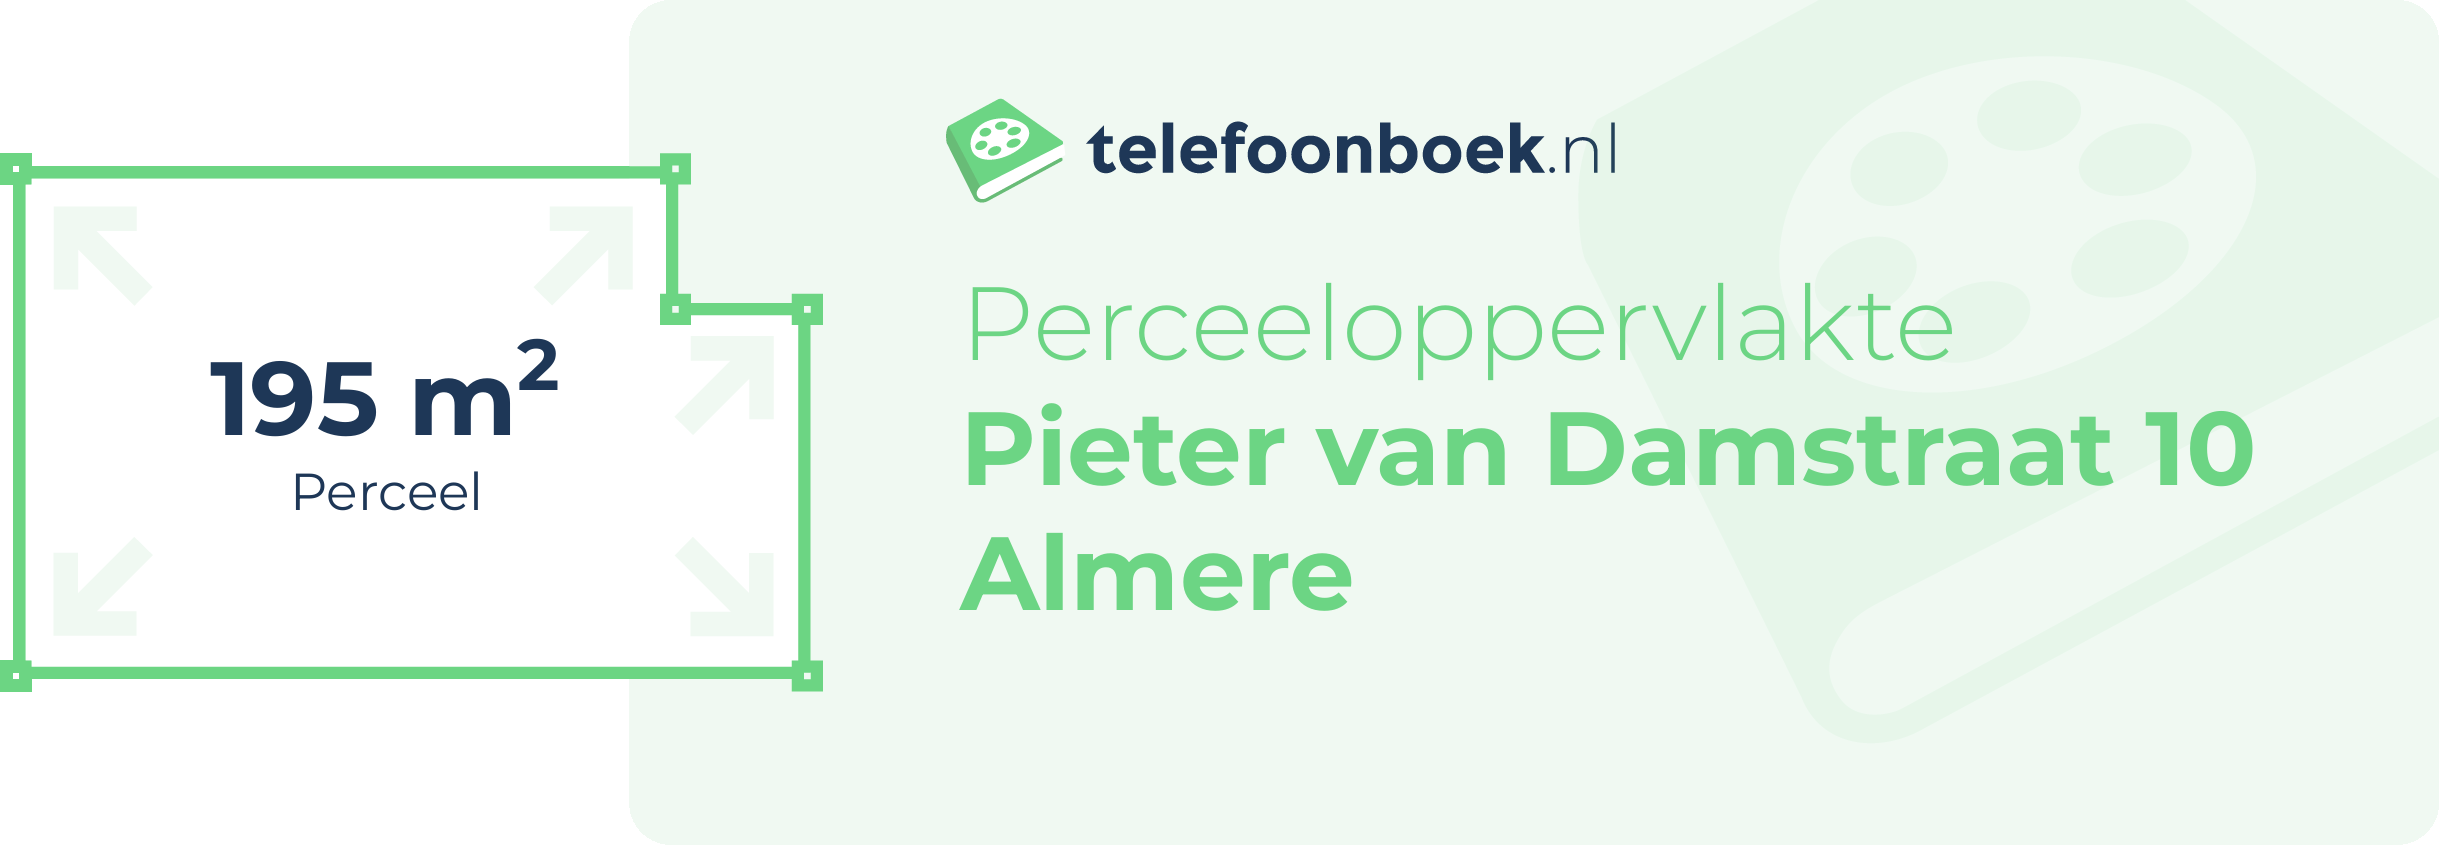 Perceeloppervlakte Pieter Van Damstraat 10 Almere